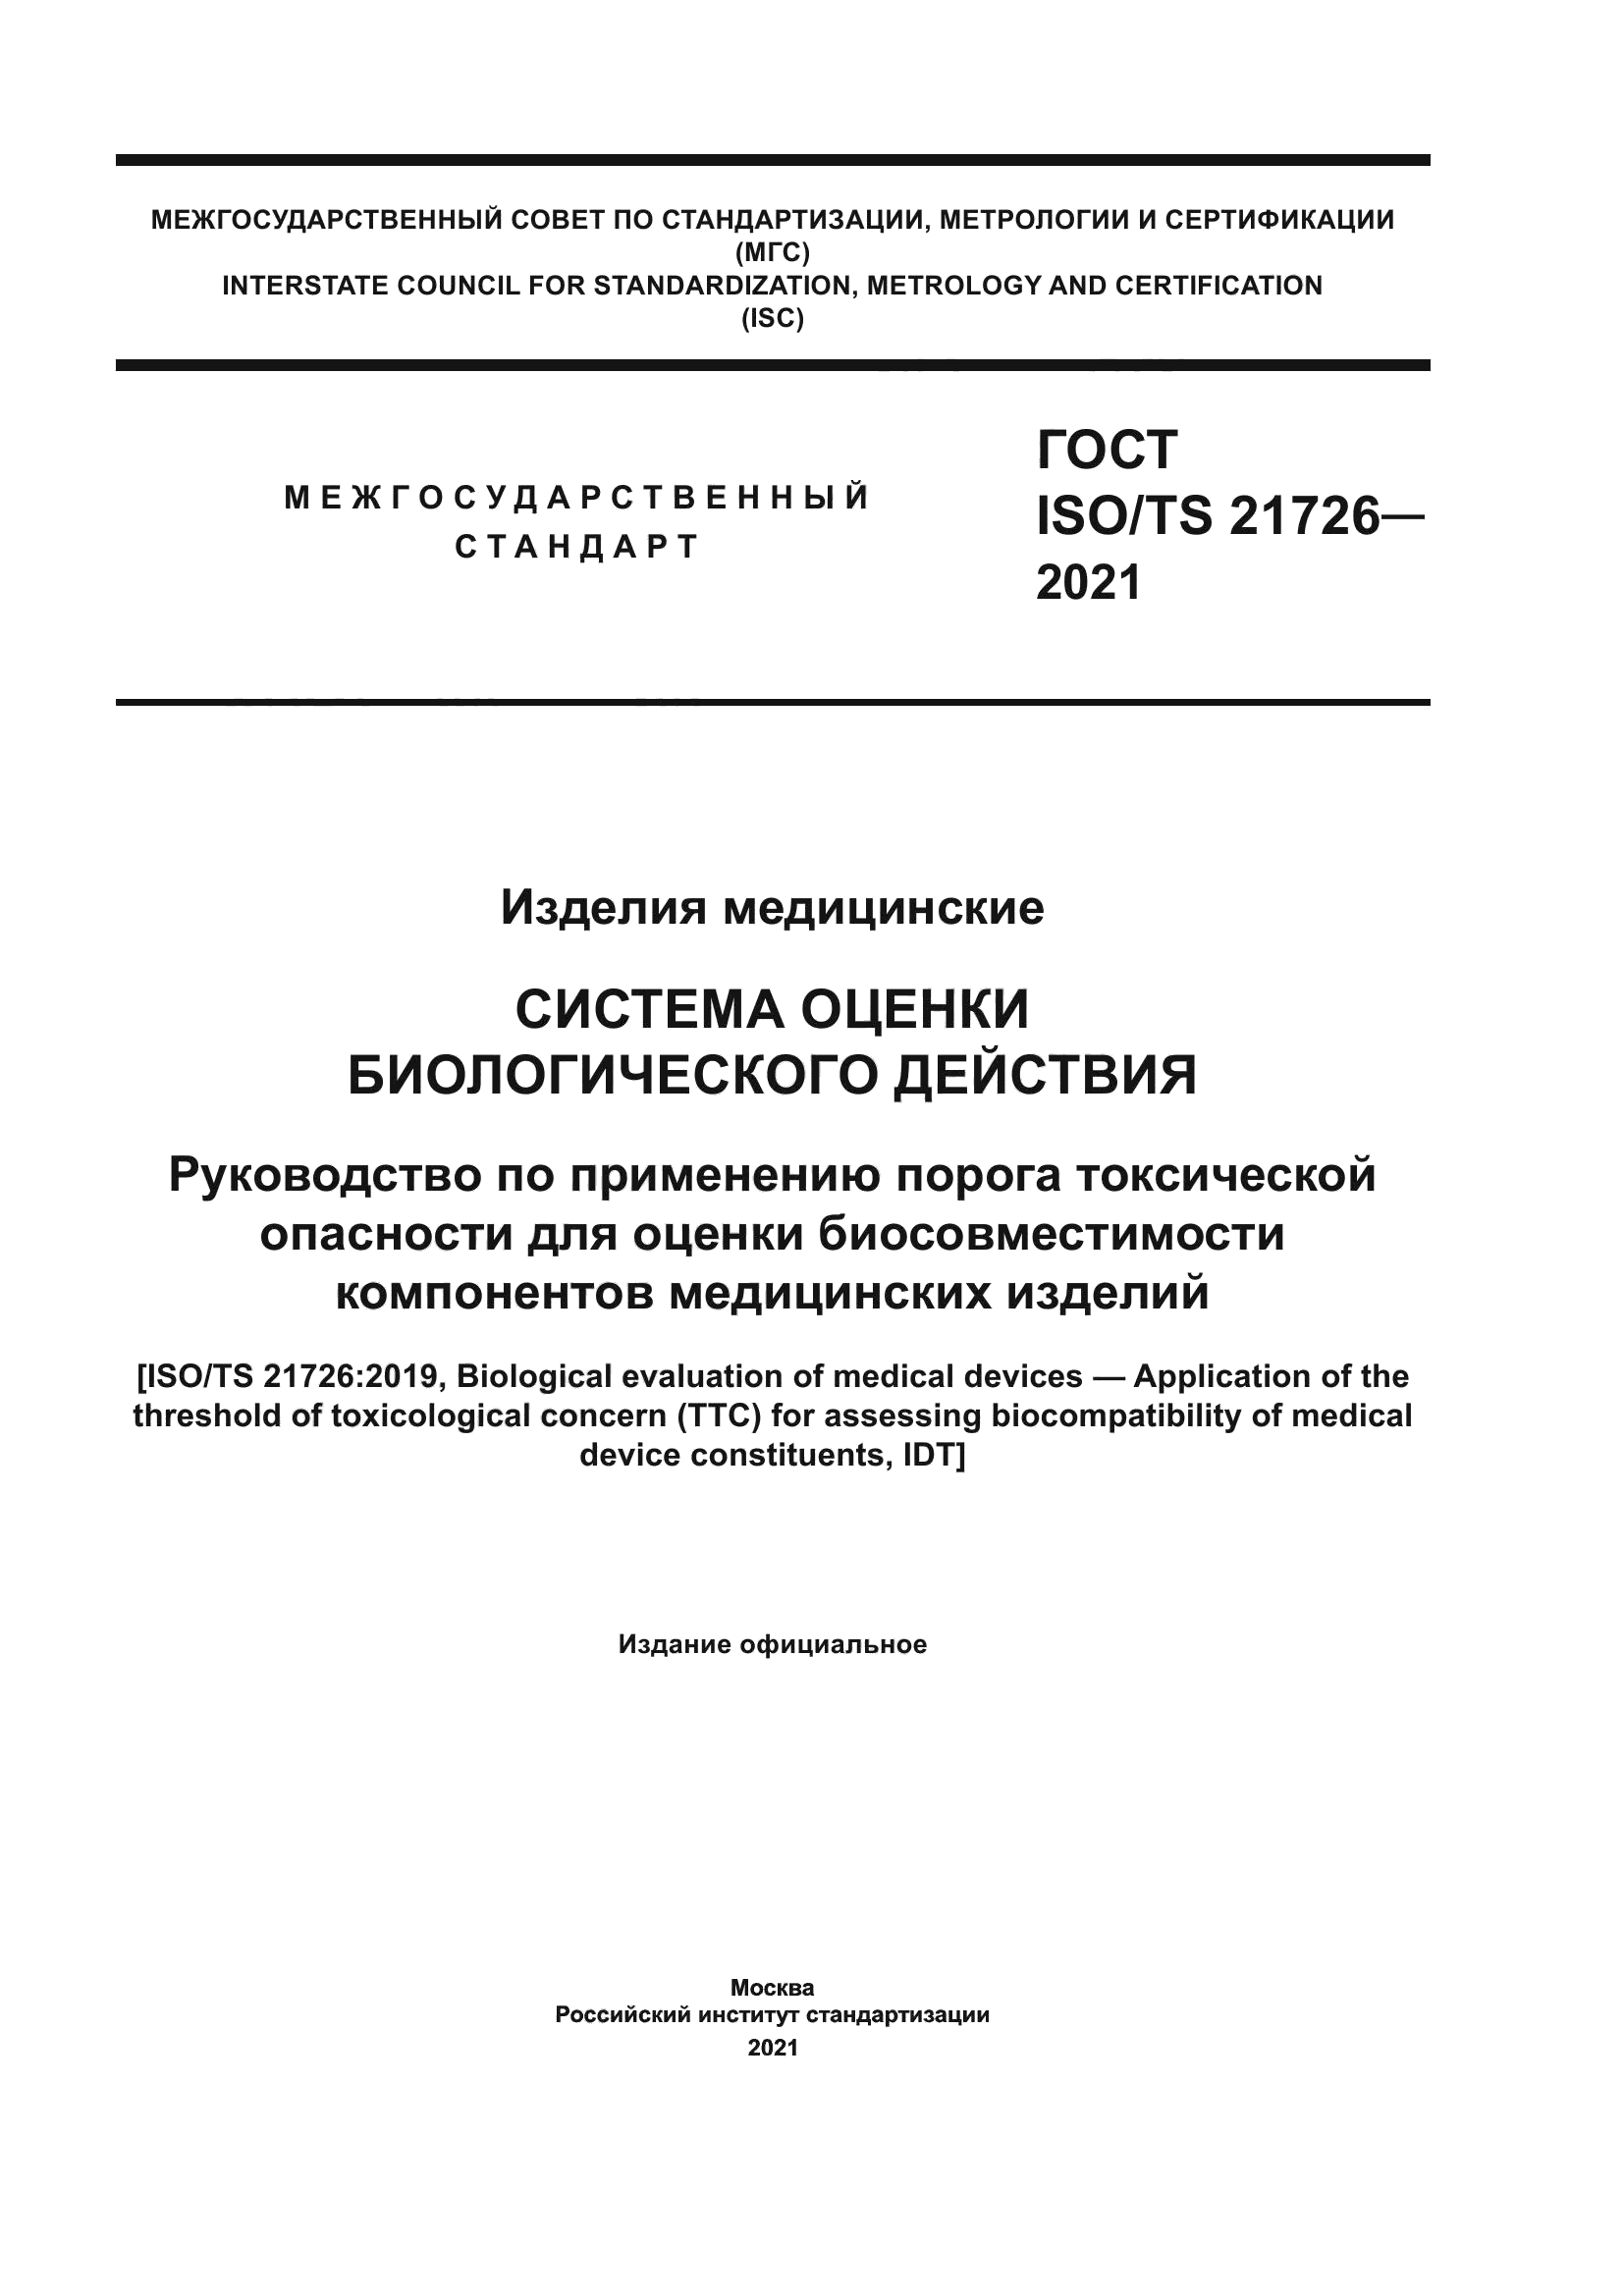 ГОСТ ISO/TS 21726-2021